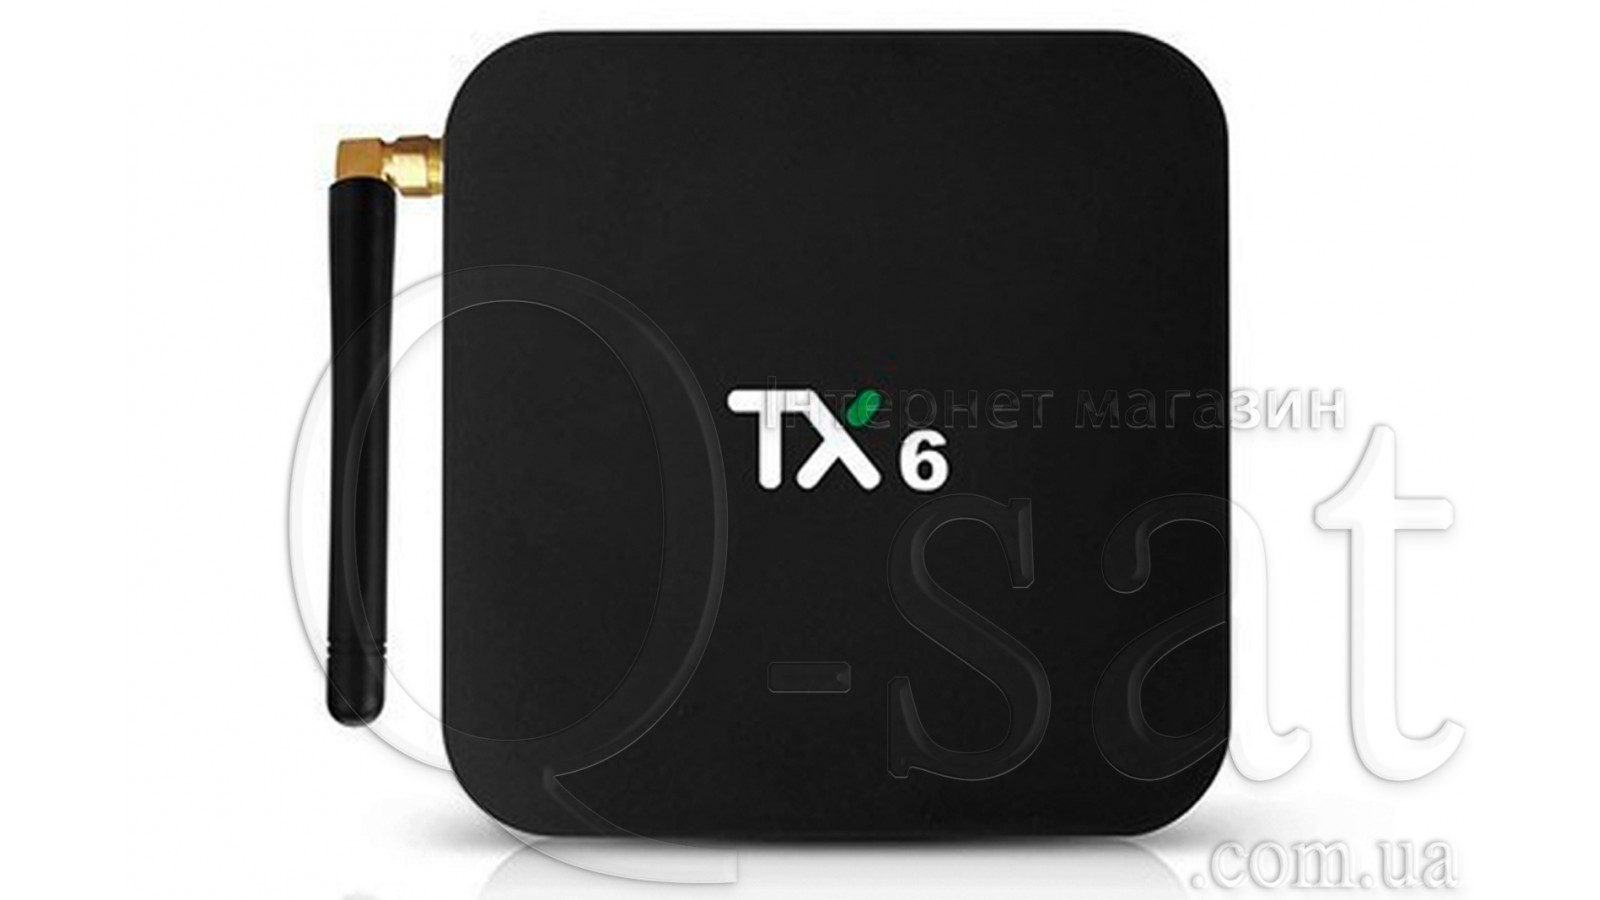 Android TV Box TX6 mіnі 4GB + 32GB andr 9.0